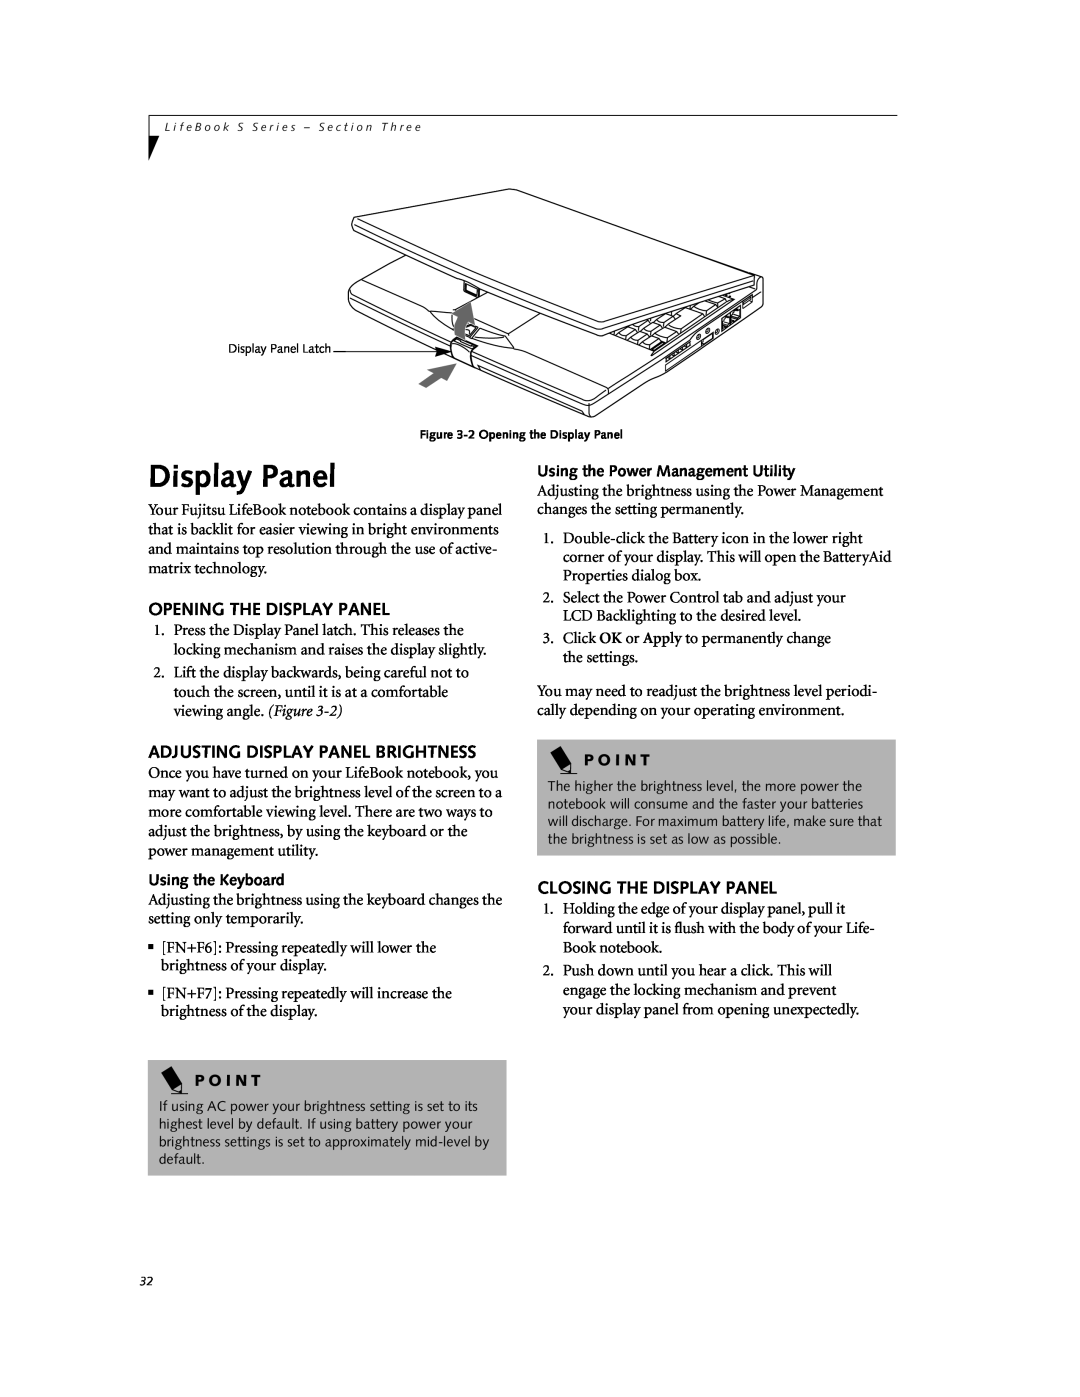 Fujitsu DVD Player Opening The Display Panel, Adjusting Display Panel Brightness, Closing The Display Panel, P O I N T 